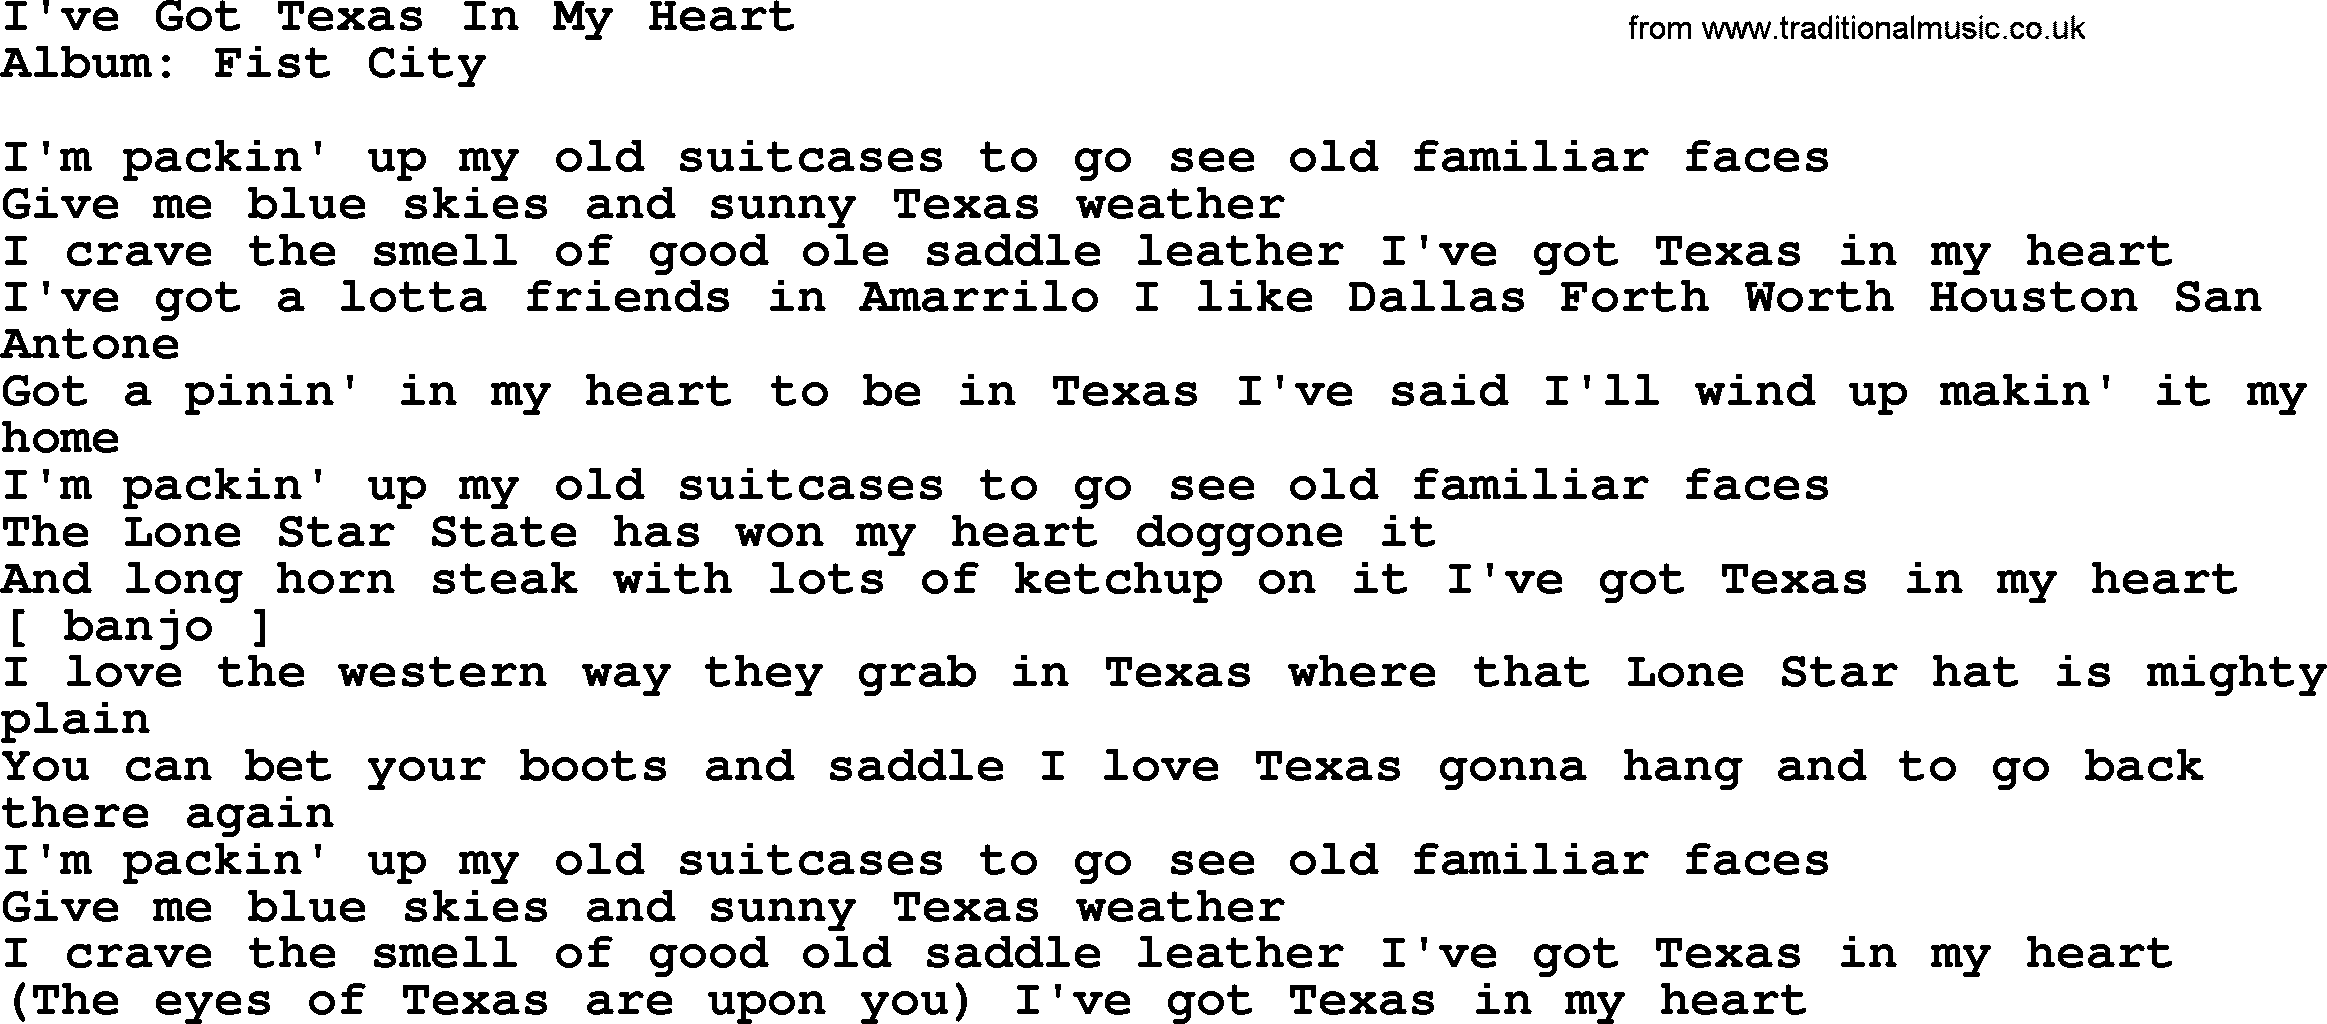 Loretta Lynn song: I've Got Texas In My Heart lyrics